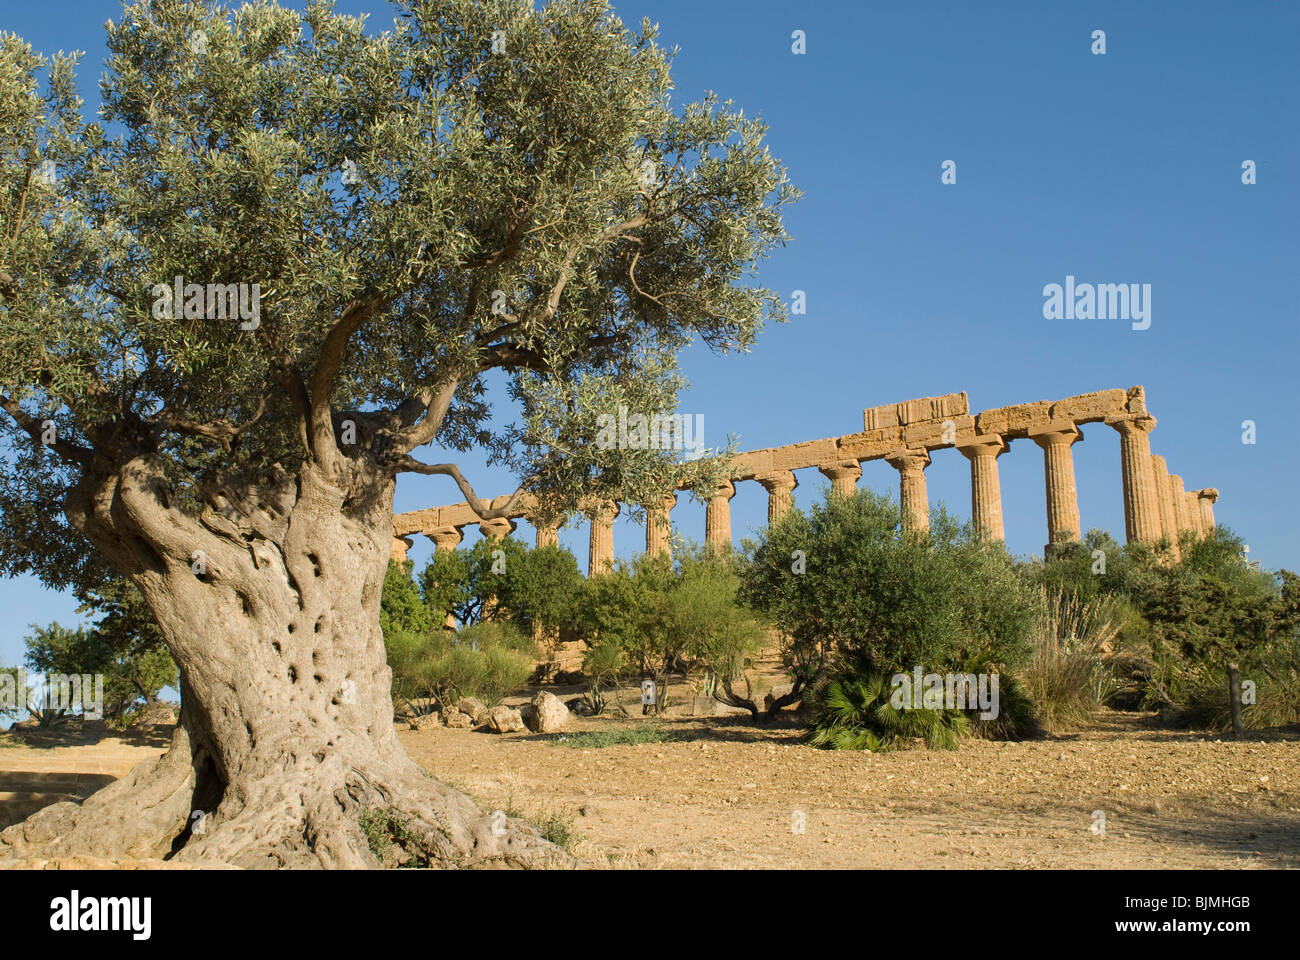 Italy, Sicily, Agrigento, Valle dei Templi, columns of Hera Temple, old olive tree Stock Photo